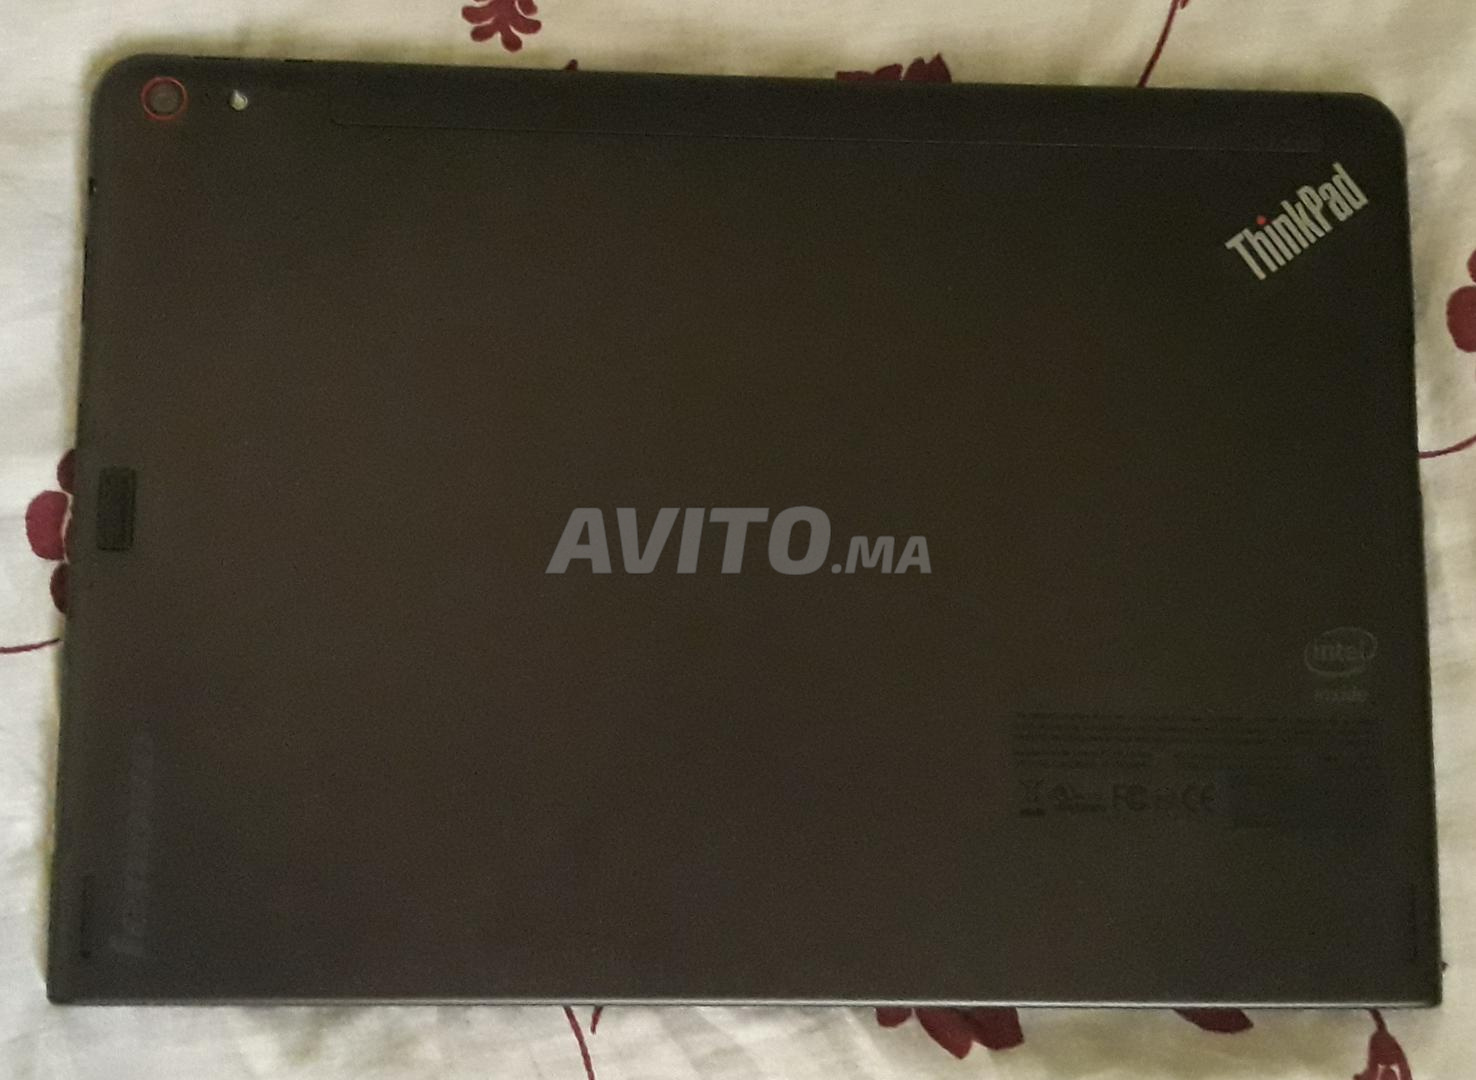 PC-Tablette (Lenovo ThinkPad) - 2